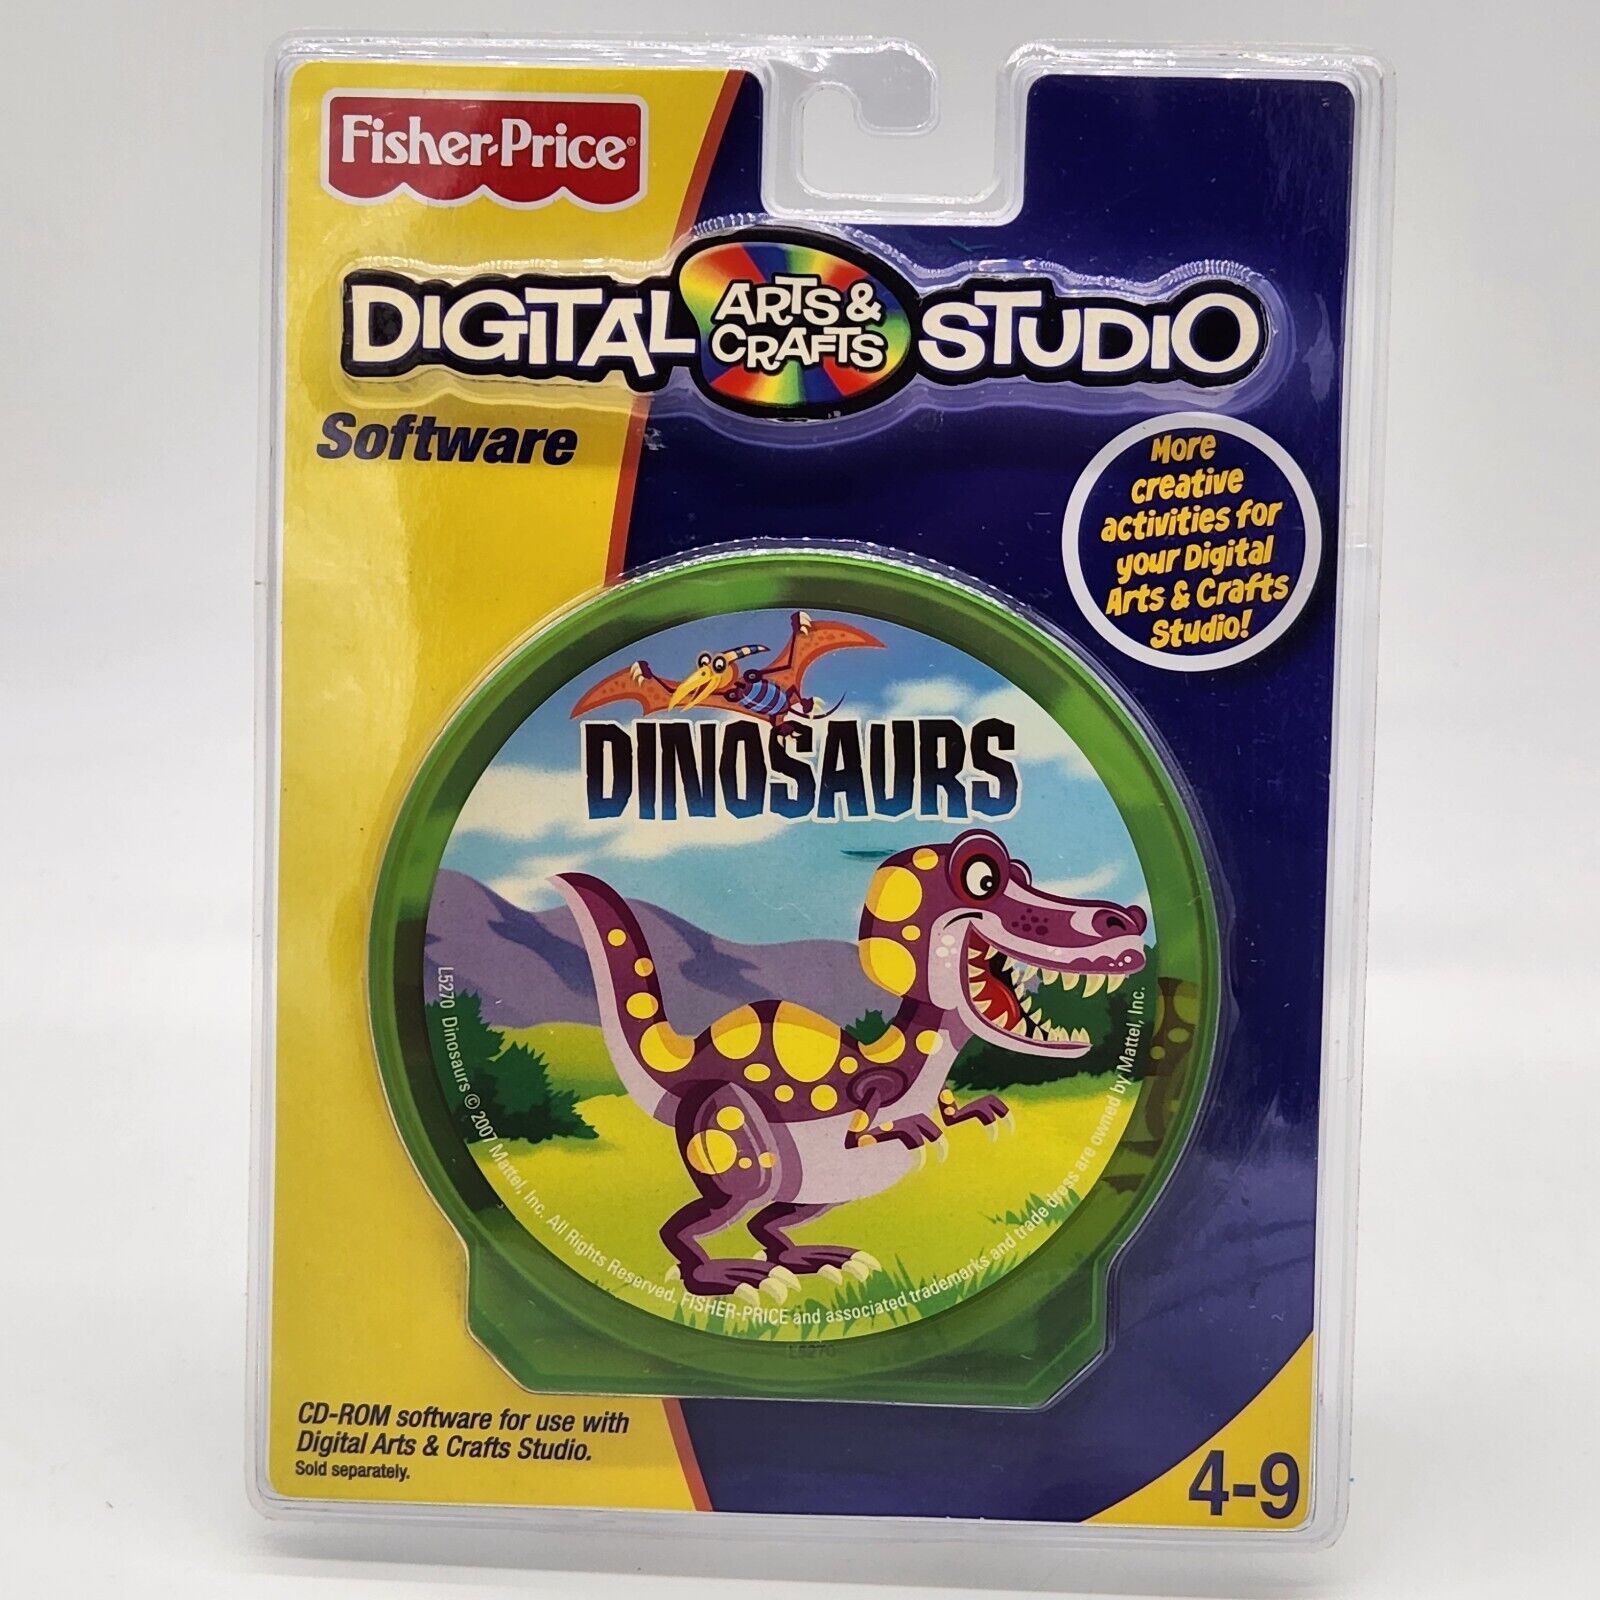 Fisher Price Digital Arts Crafts Studio Dinosaurs Software 4-9 CD-ROM Sealed 